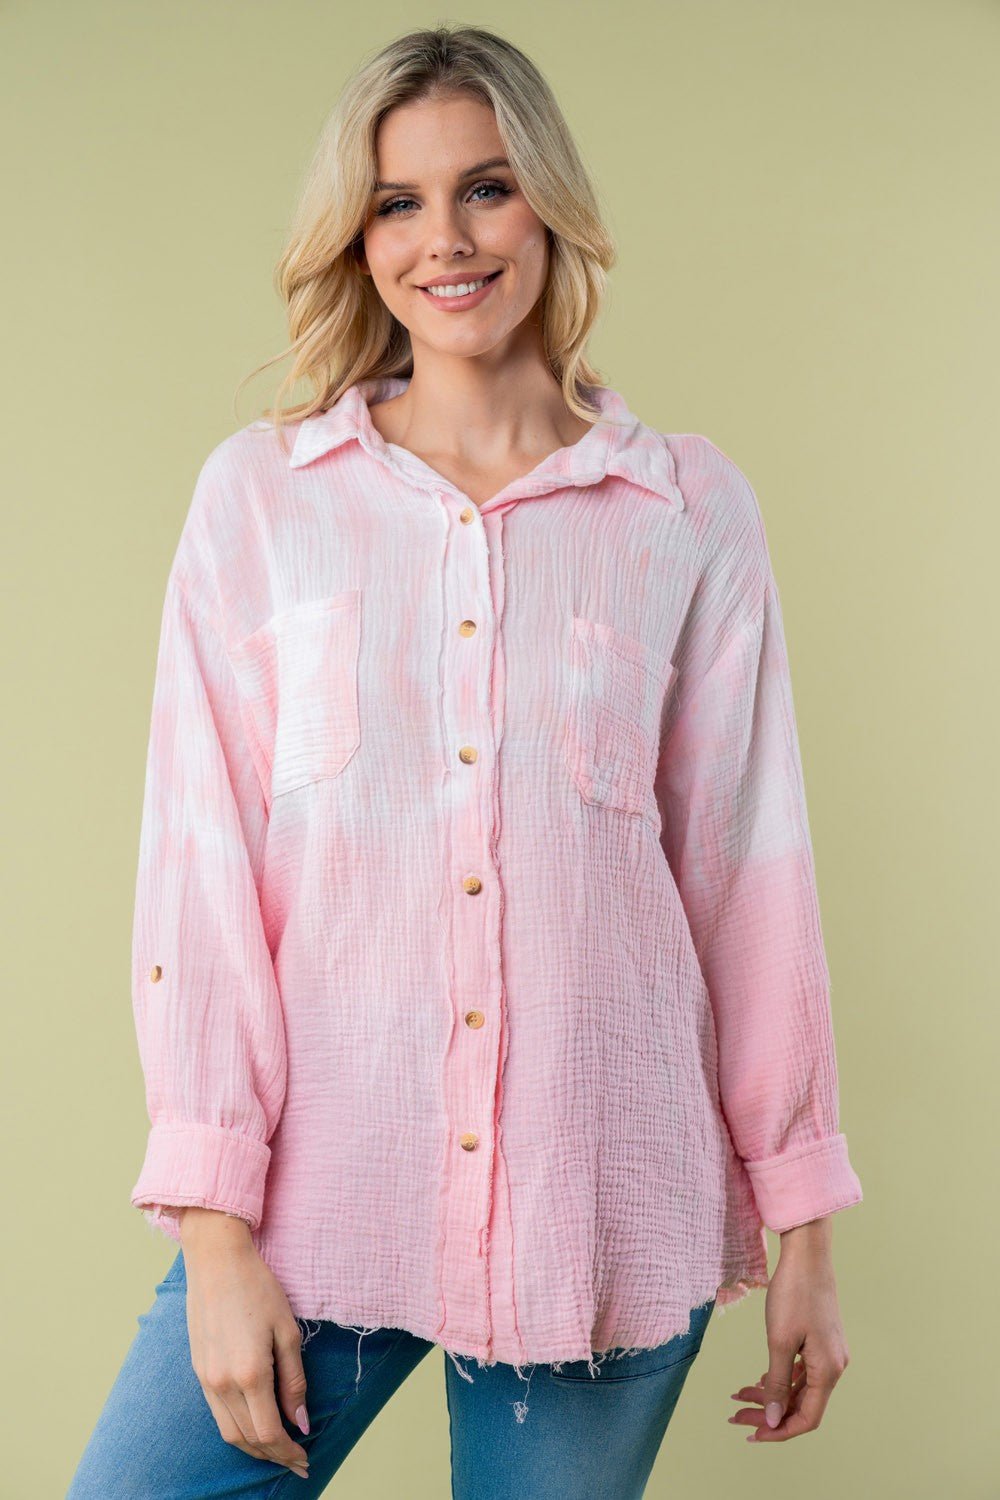 Long Sleeve Tie Dye Shirt in PinkShirtWhite Birch